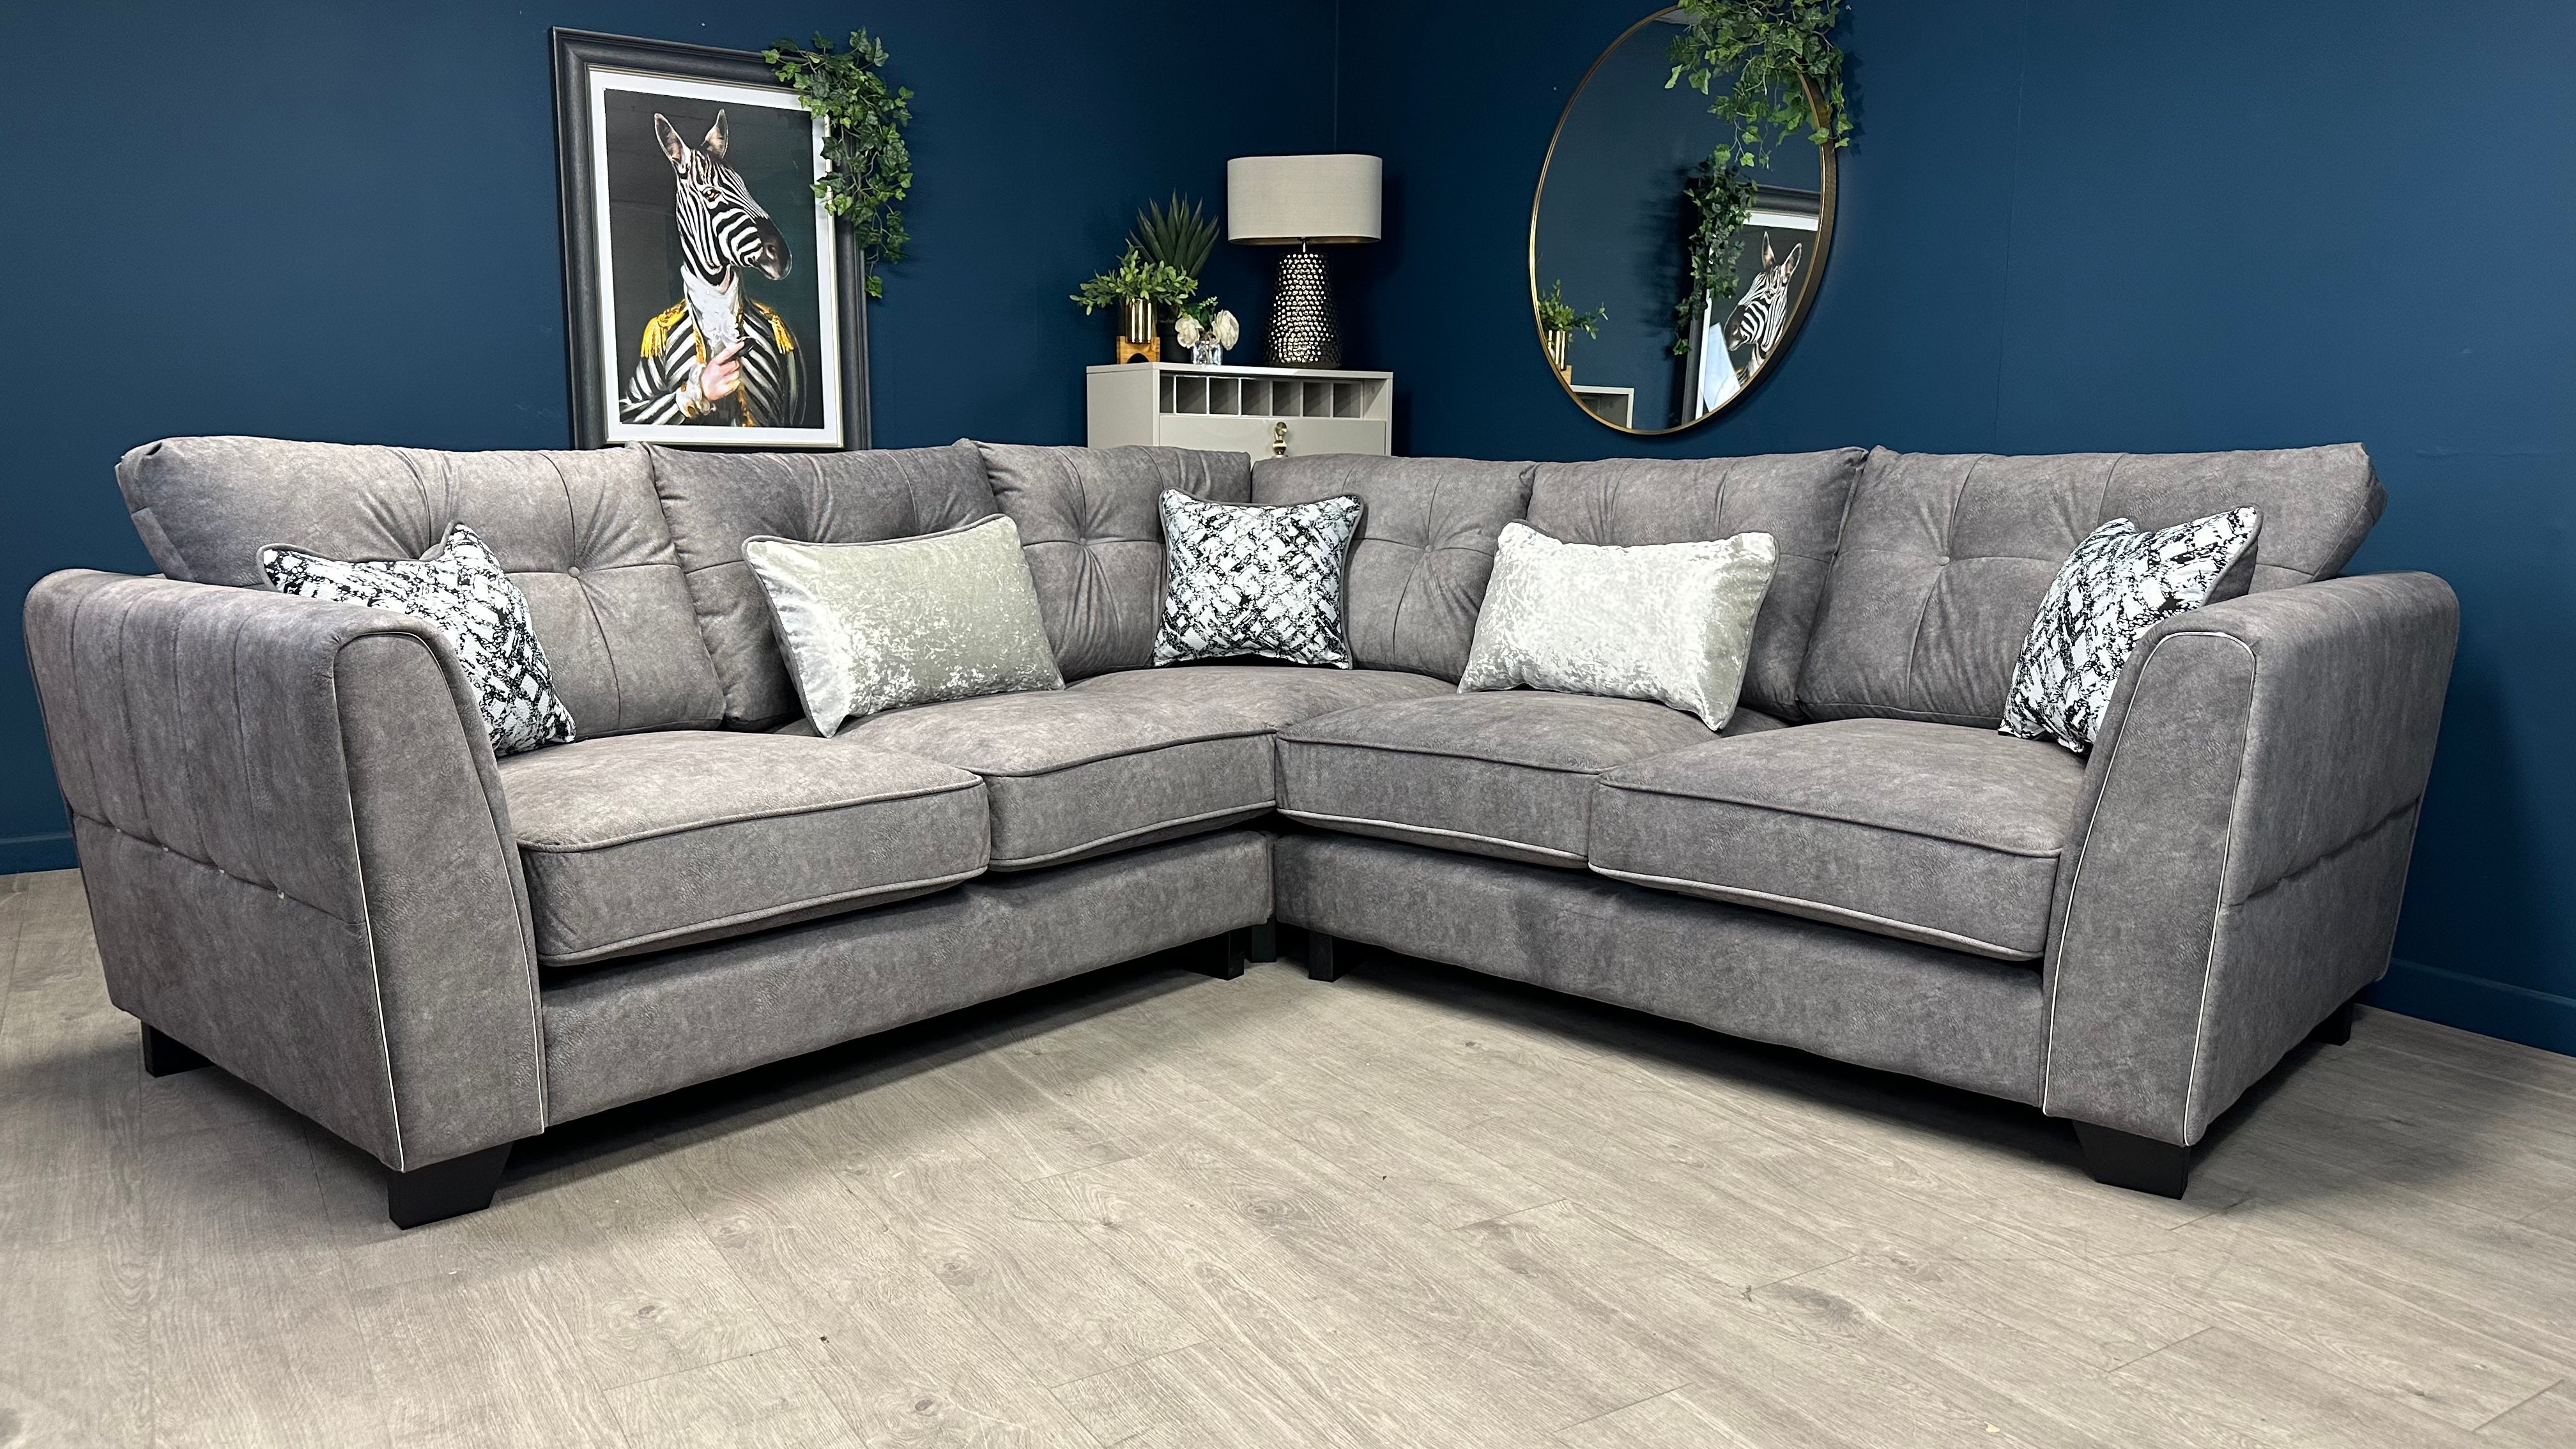 Ariana corner sofa by Furniture village